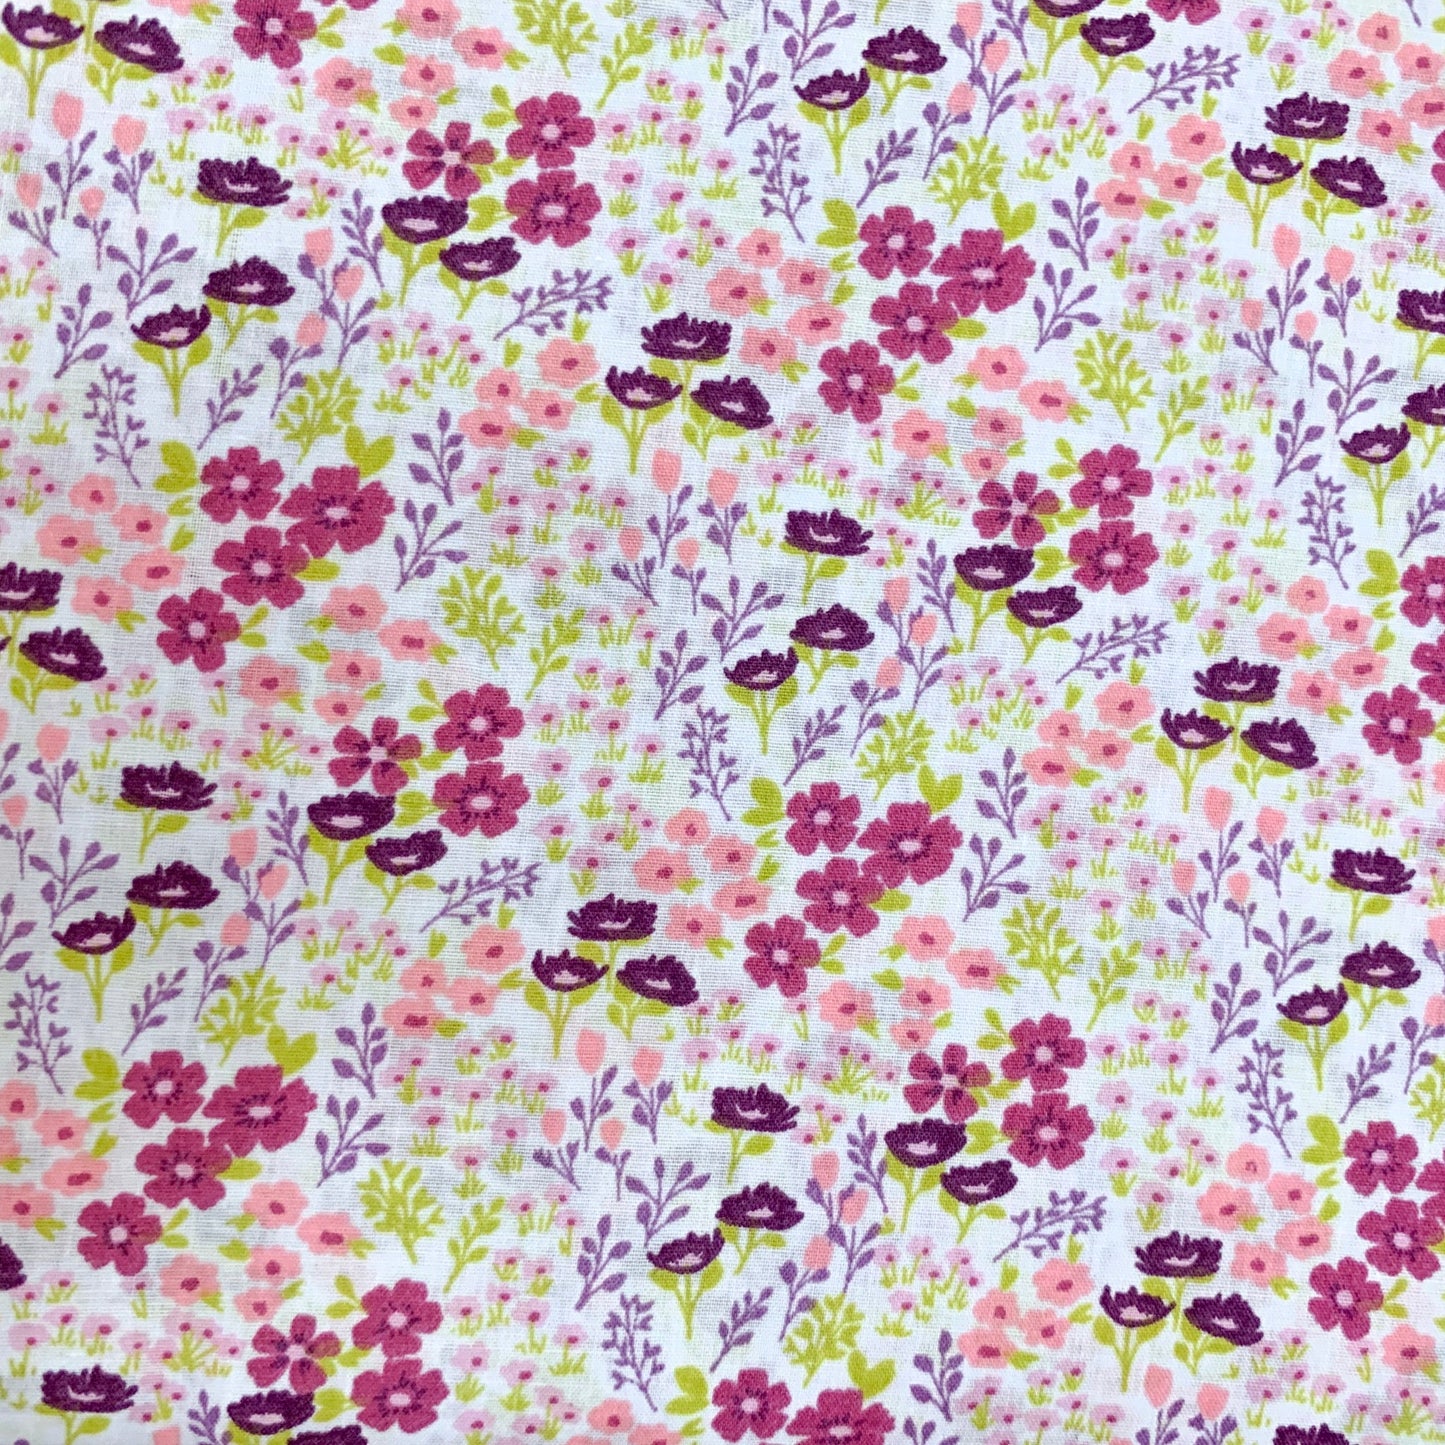 Fabric Felt Sheet - Wildflowers - White